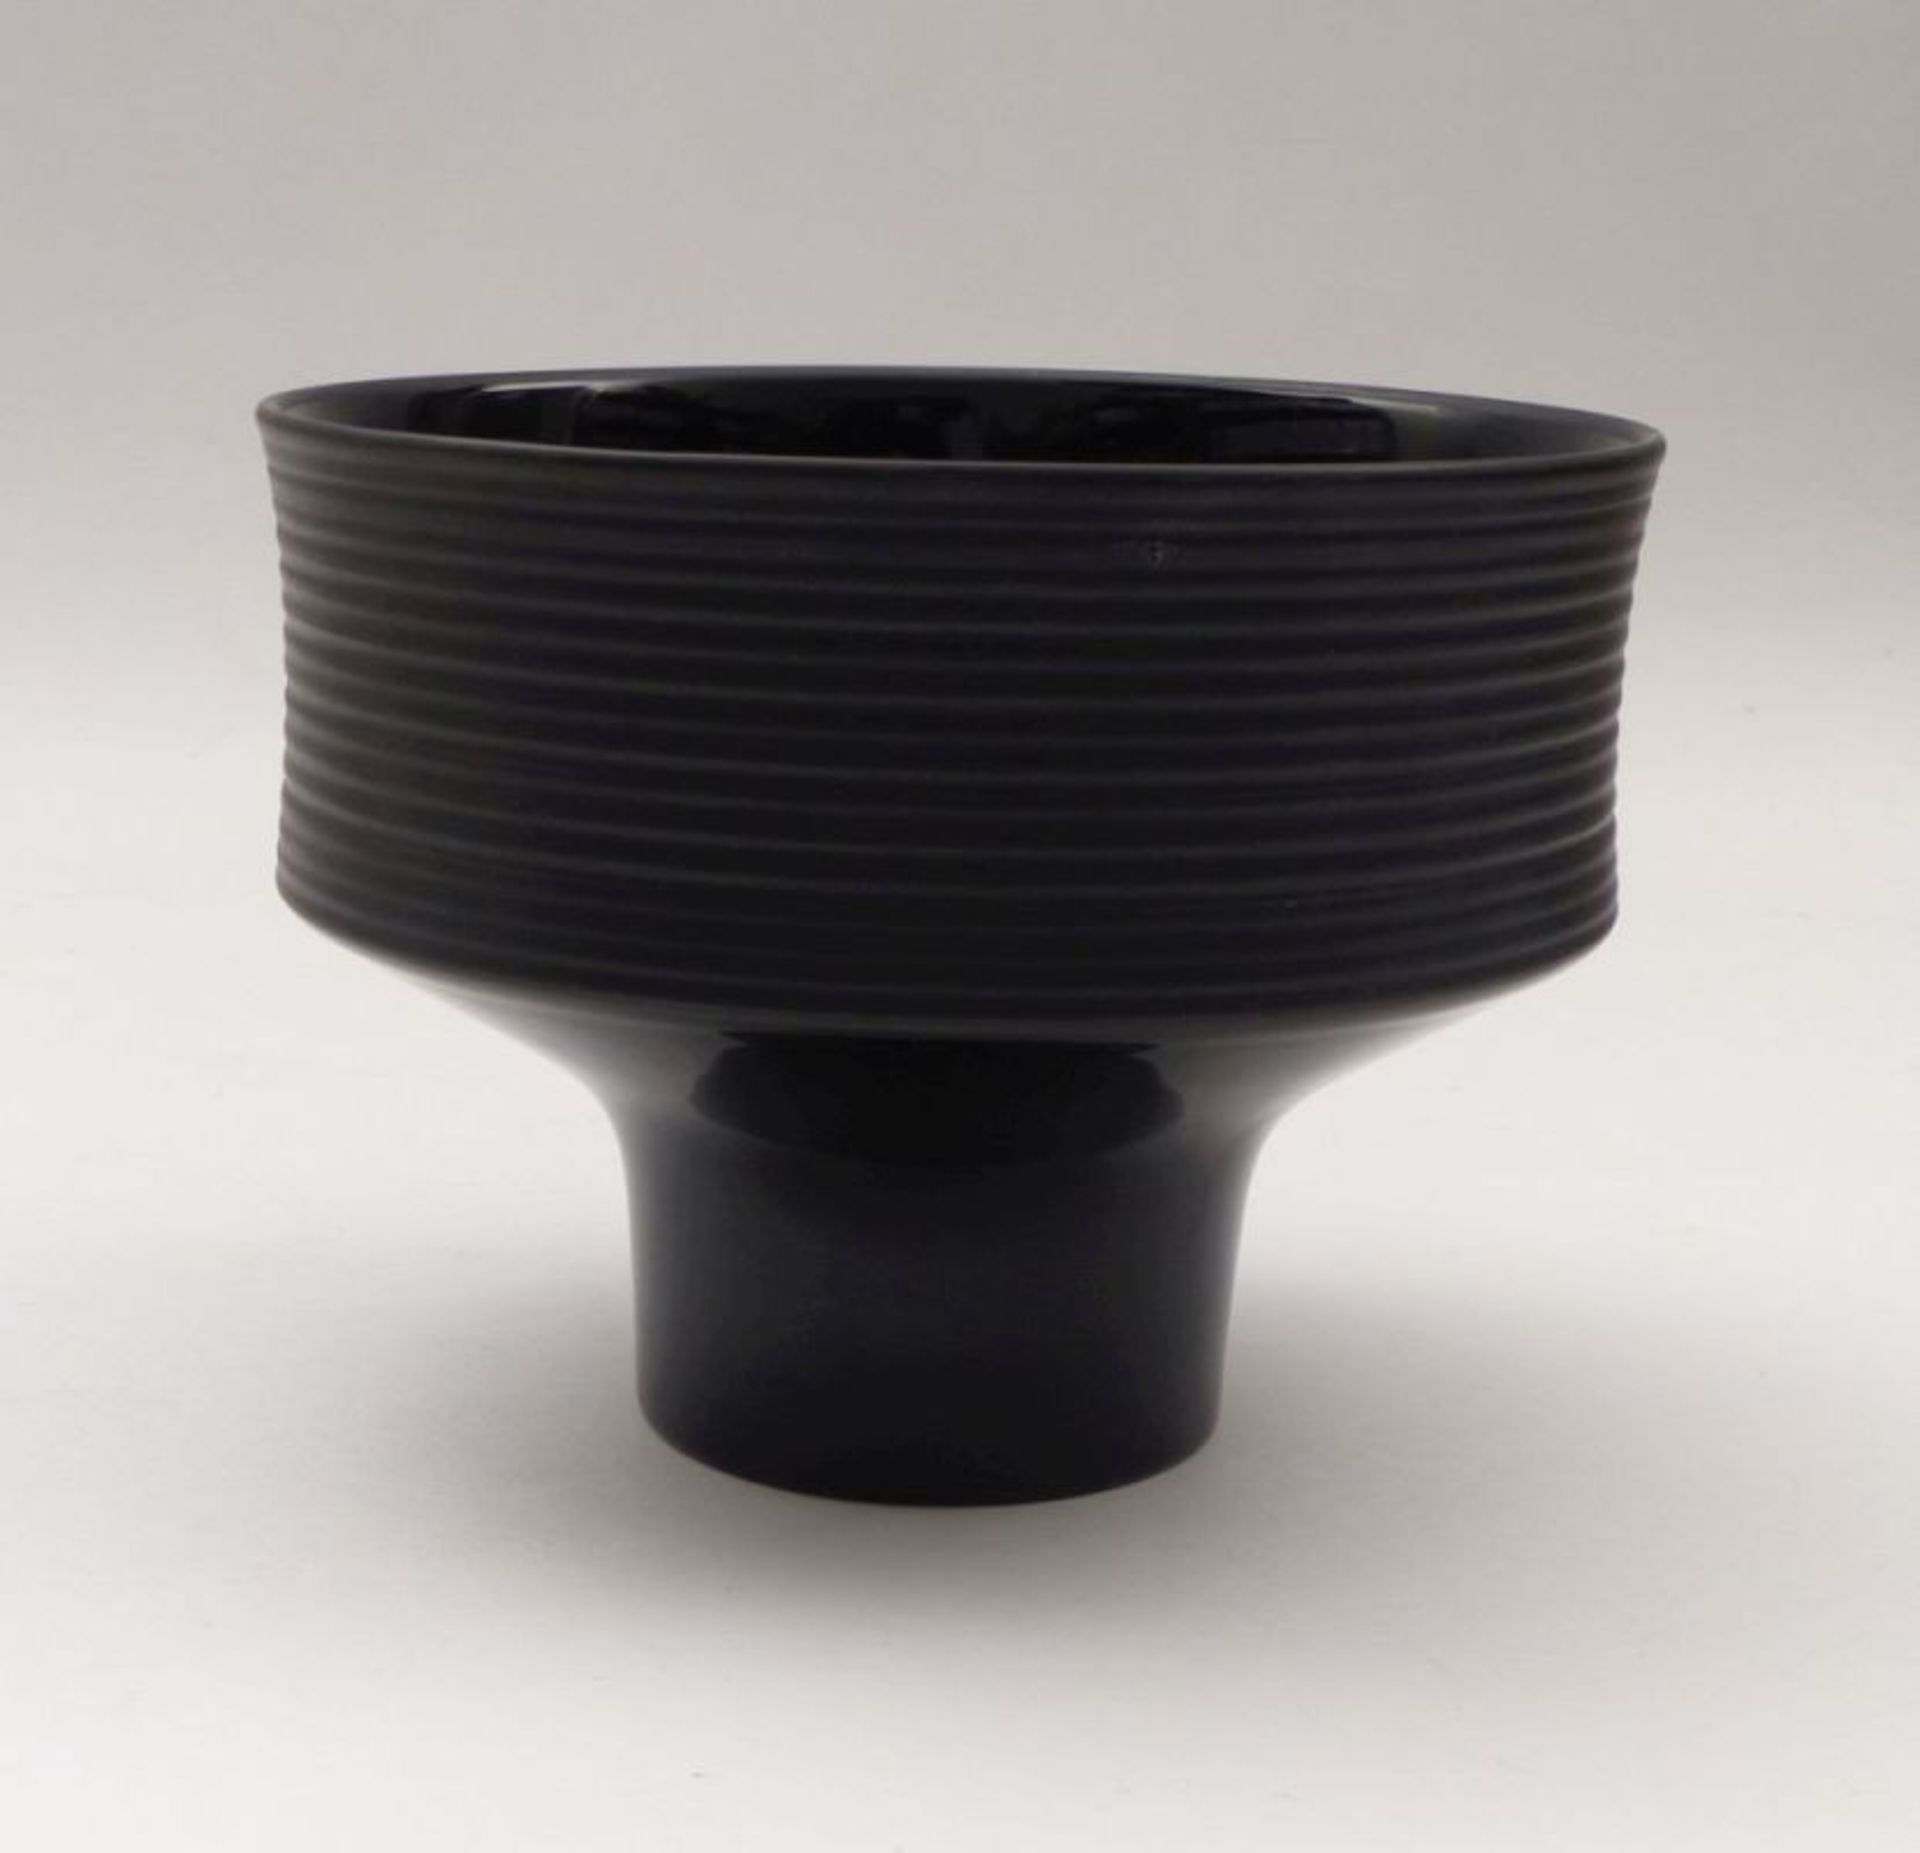 Wirkkala, Tapio''Porcelaine noire''- bowl(Hanko 1915-1985 Helsinki) For Rosenthal, studio line,